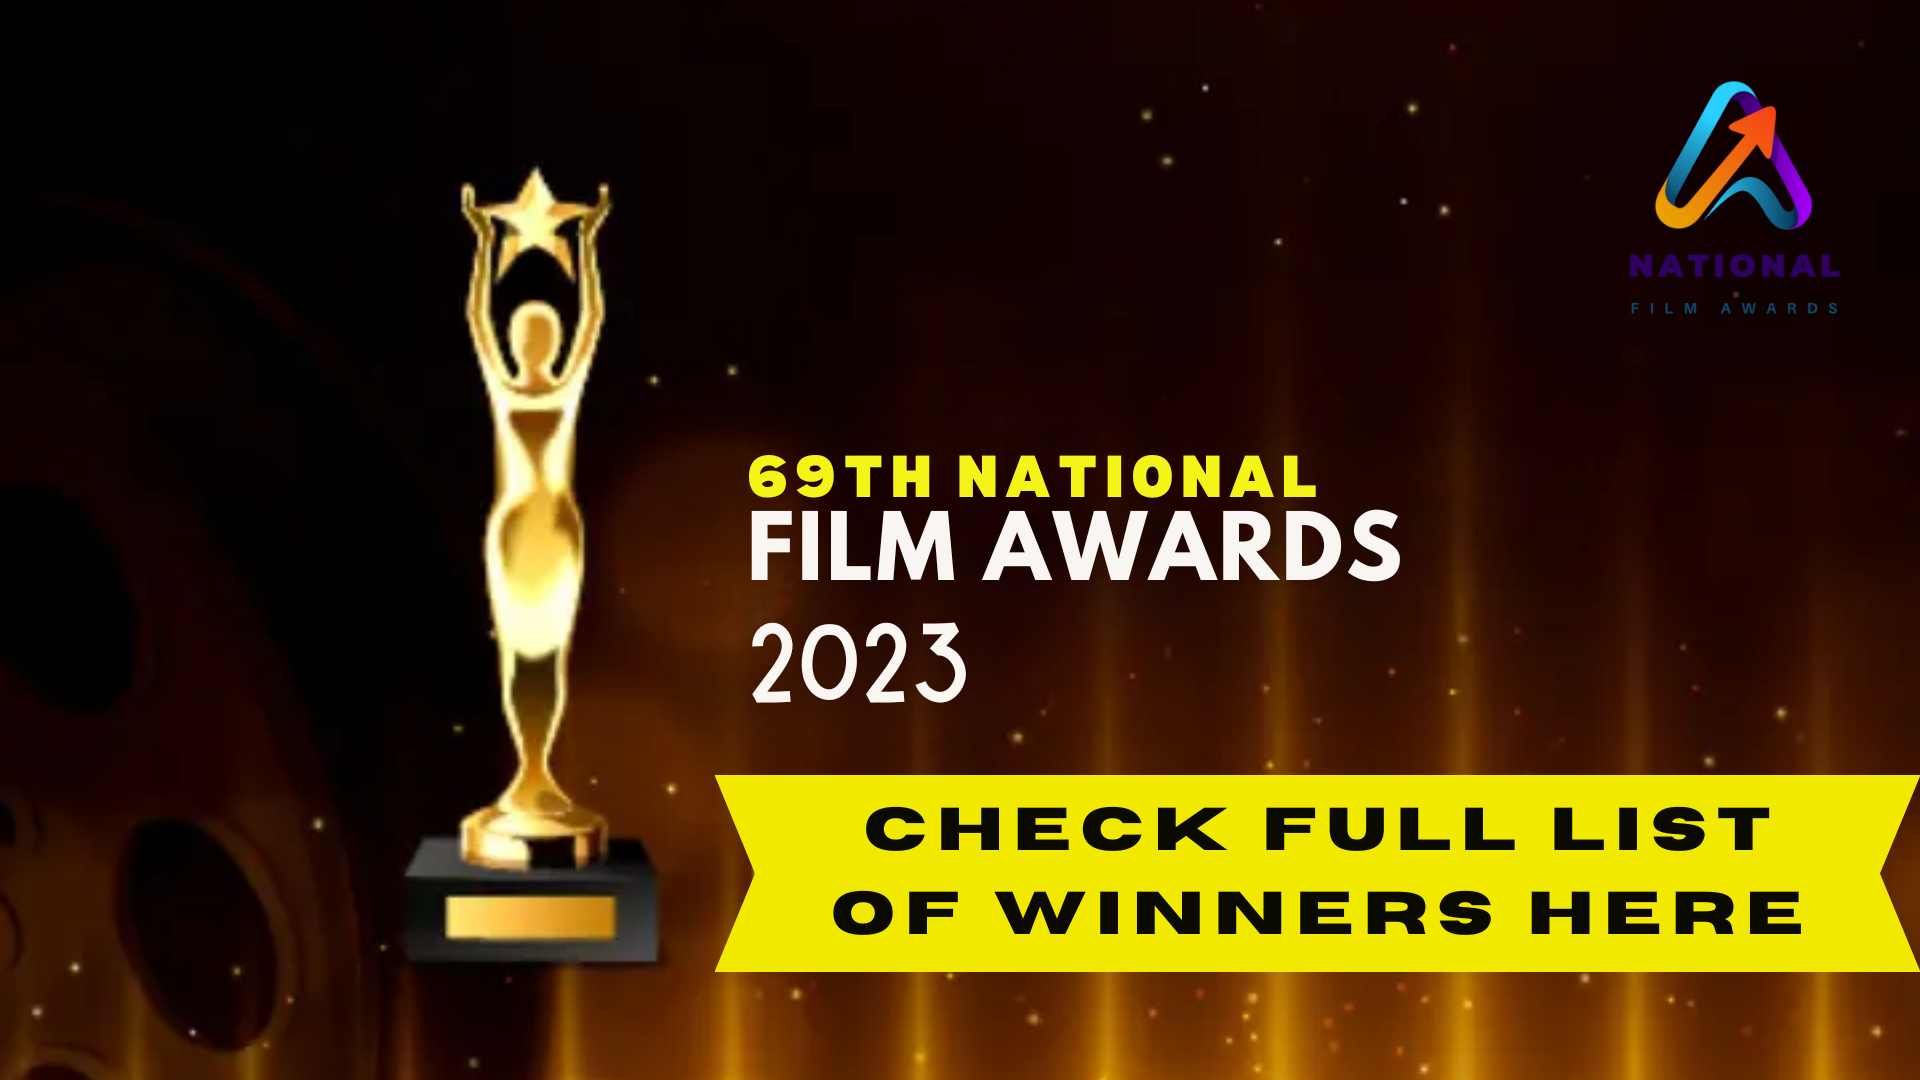 69th National Film Awards 2023: Check Full List of Winners Here